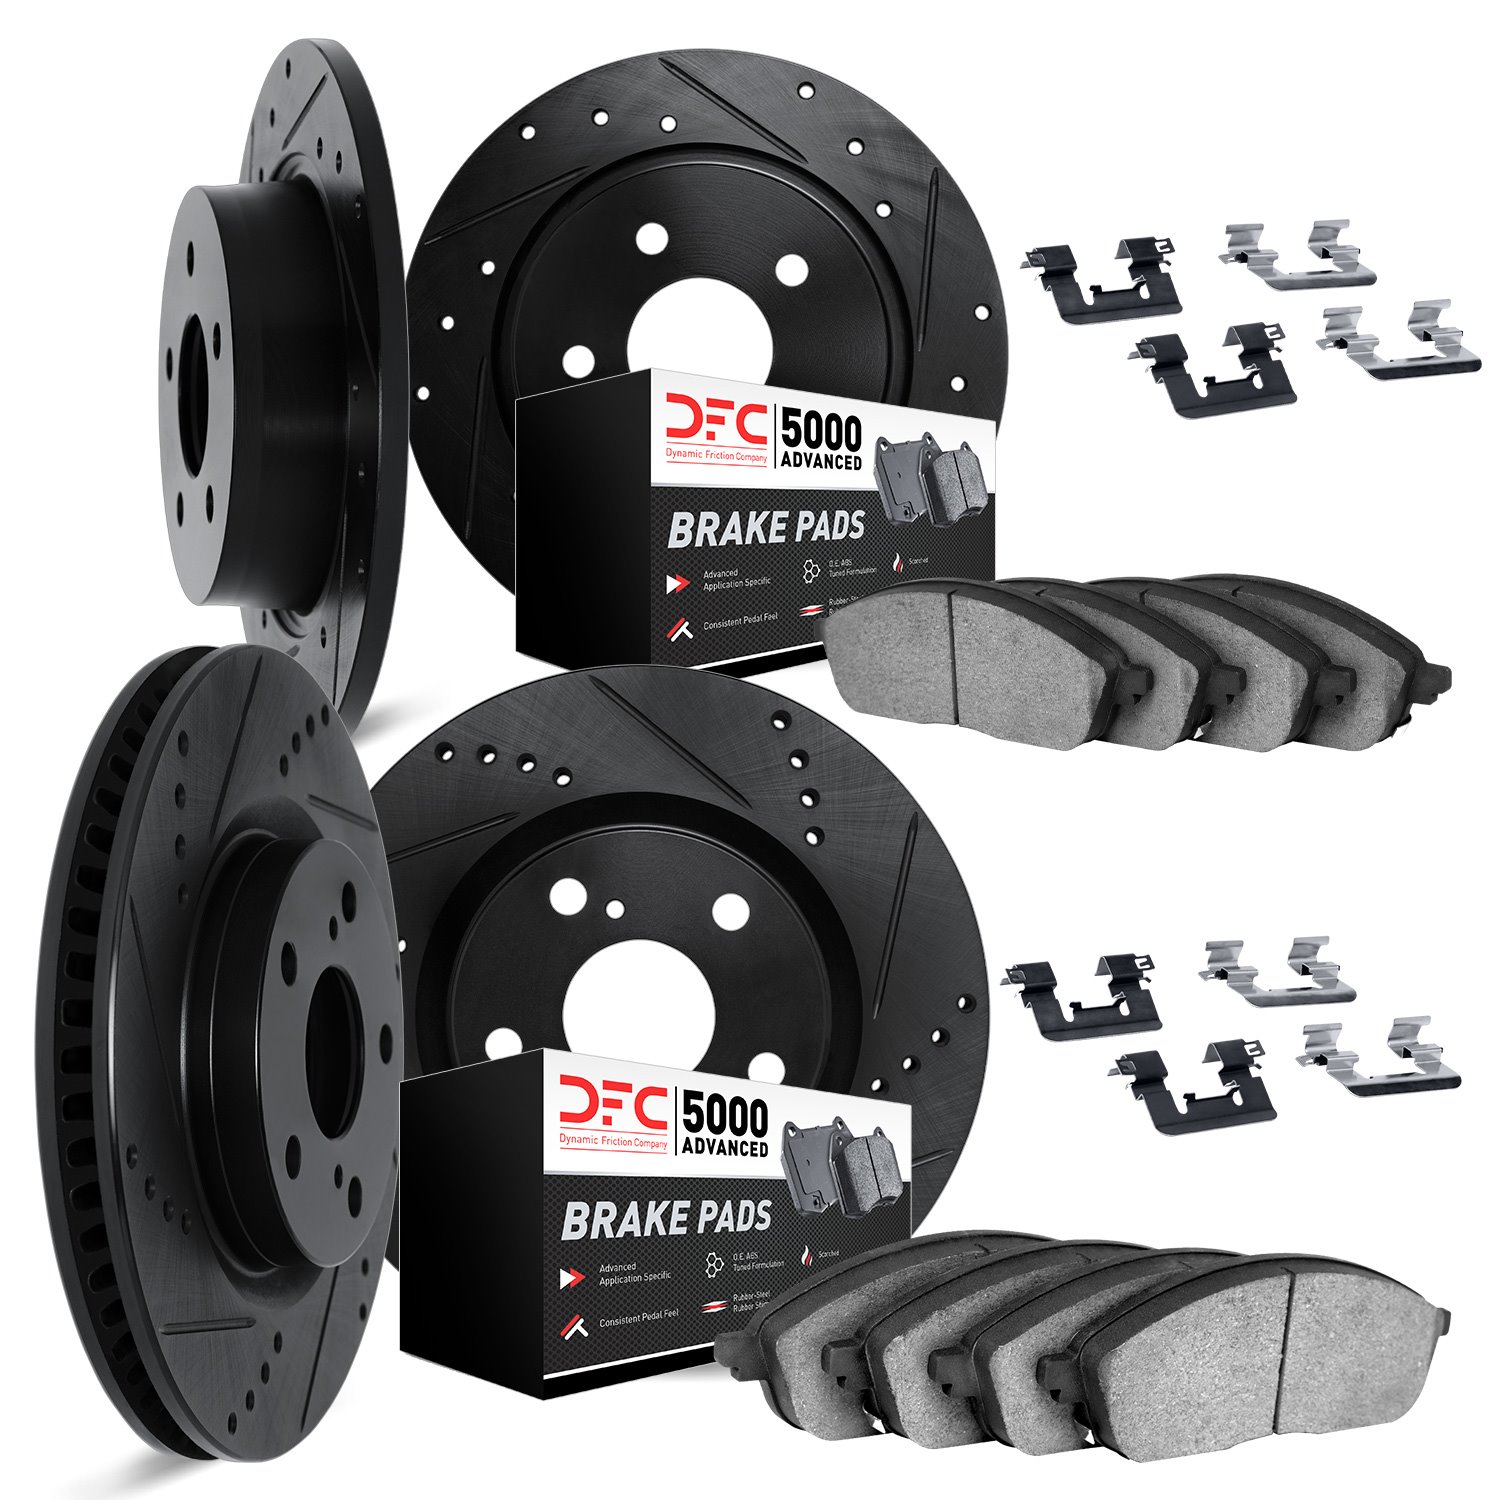 8514-54479 Drilled/Slotted Brake Rotors w/5000 Advanced Brake Pads Kit & Hardware [Black], 2015-2019 Ford/Lincoln/Mercury/Mazda,